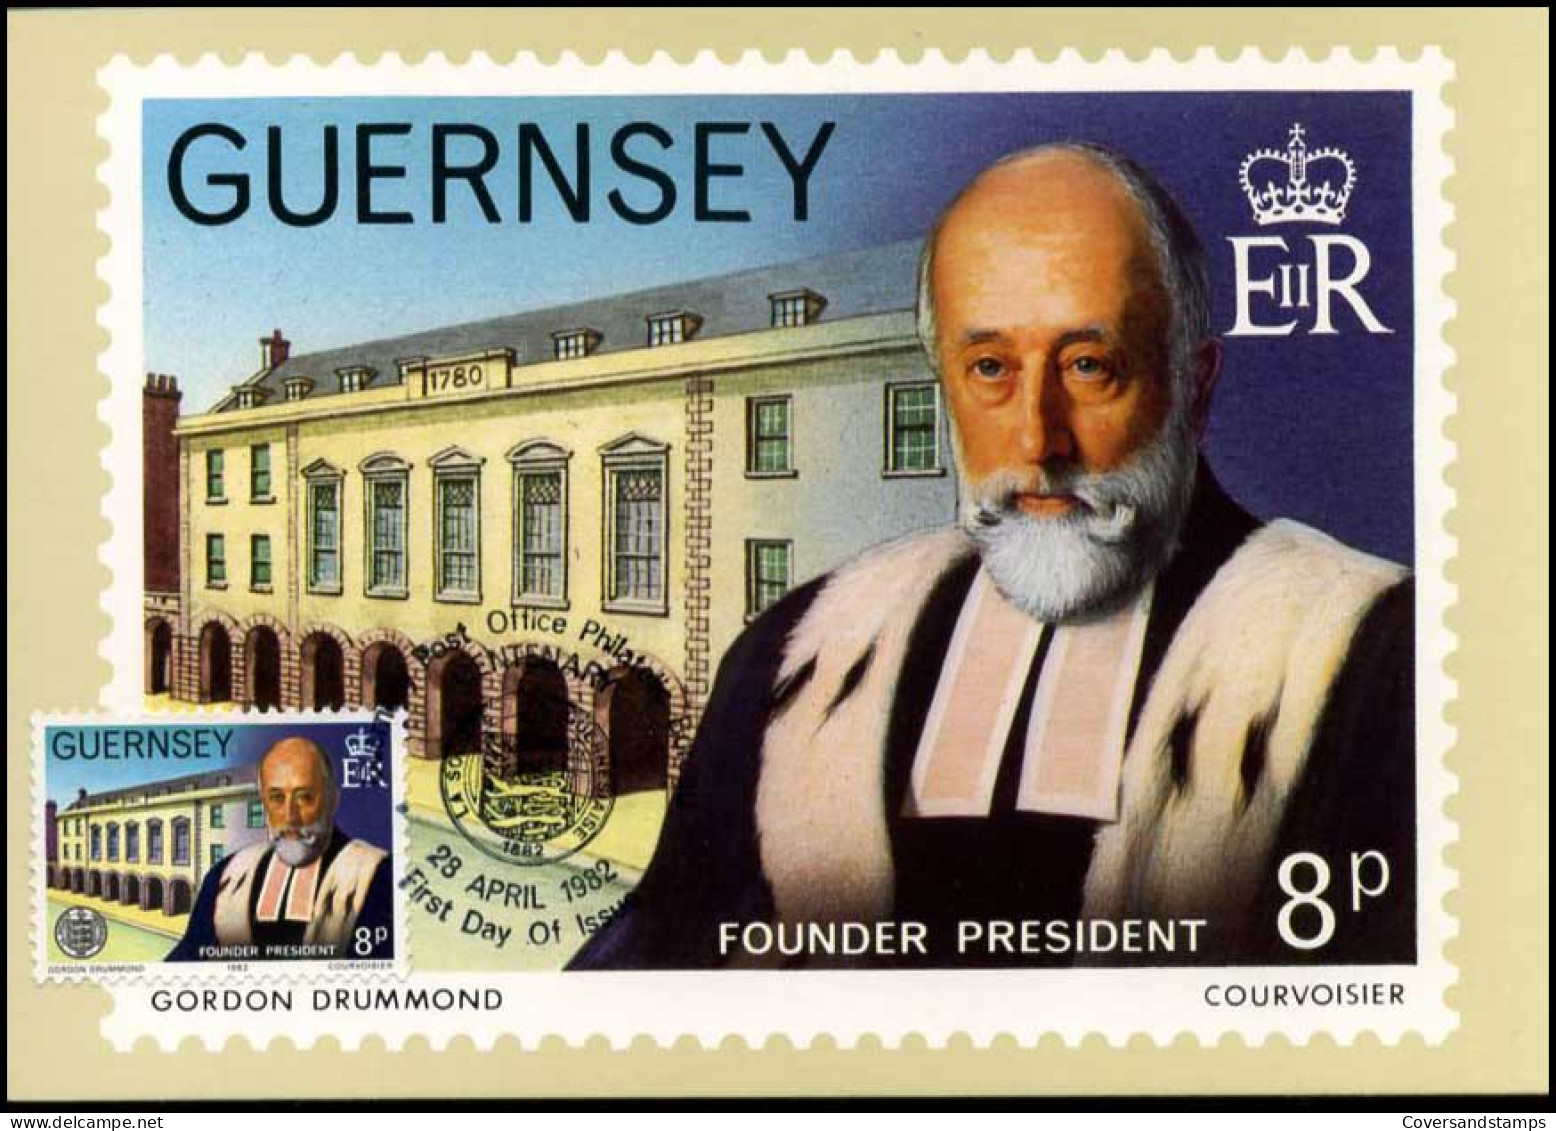  Guernsey - MK -  Europa - Guernsey